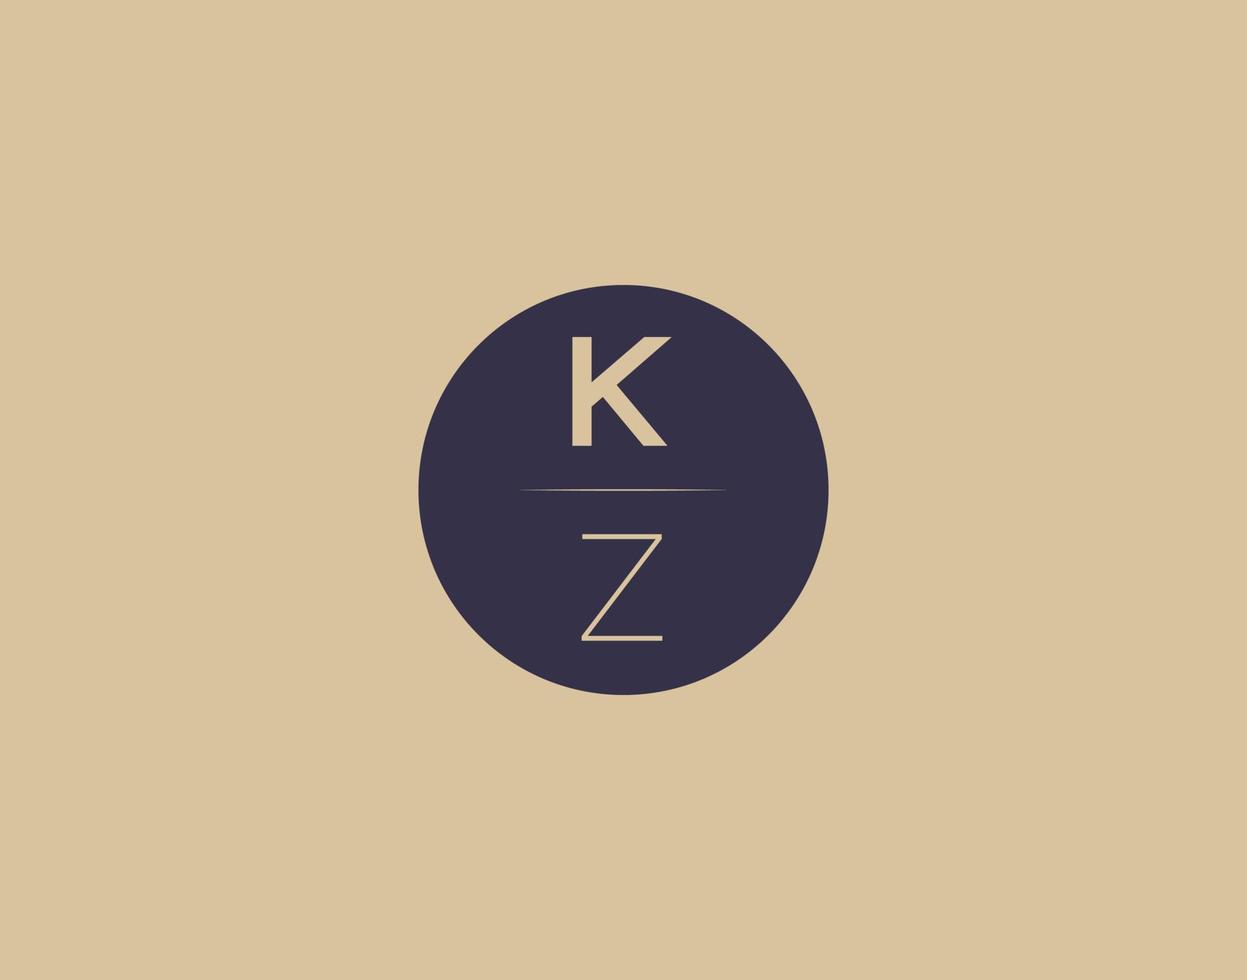 KZ letter modern elegant logo design vector images